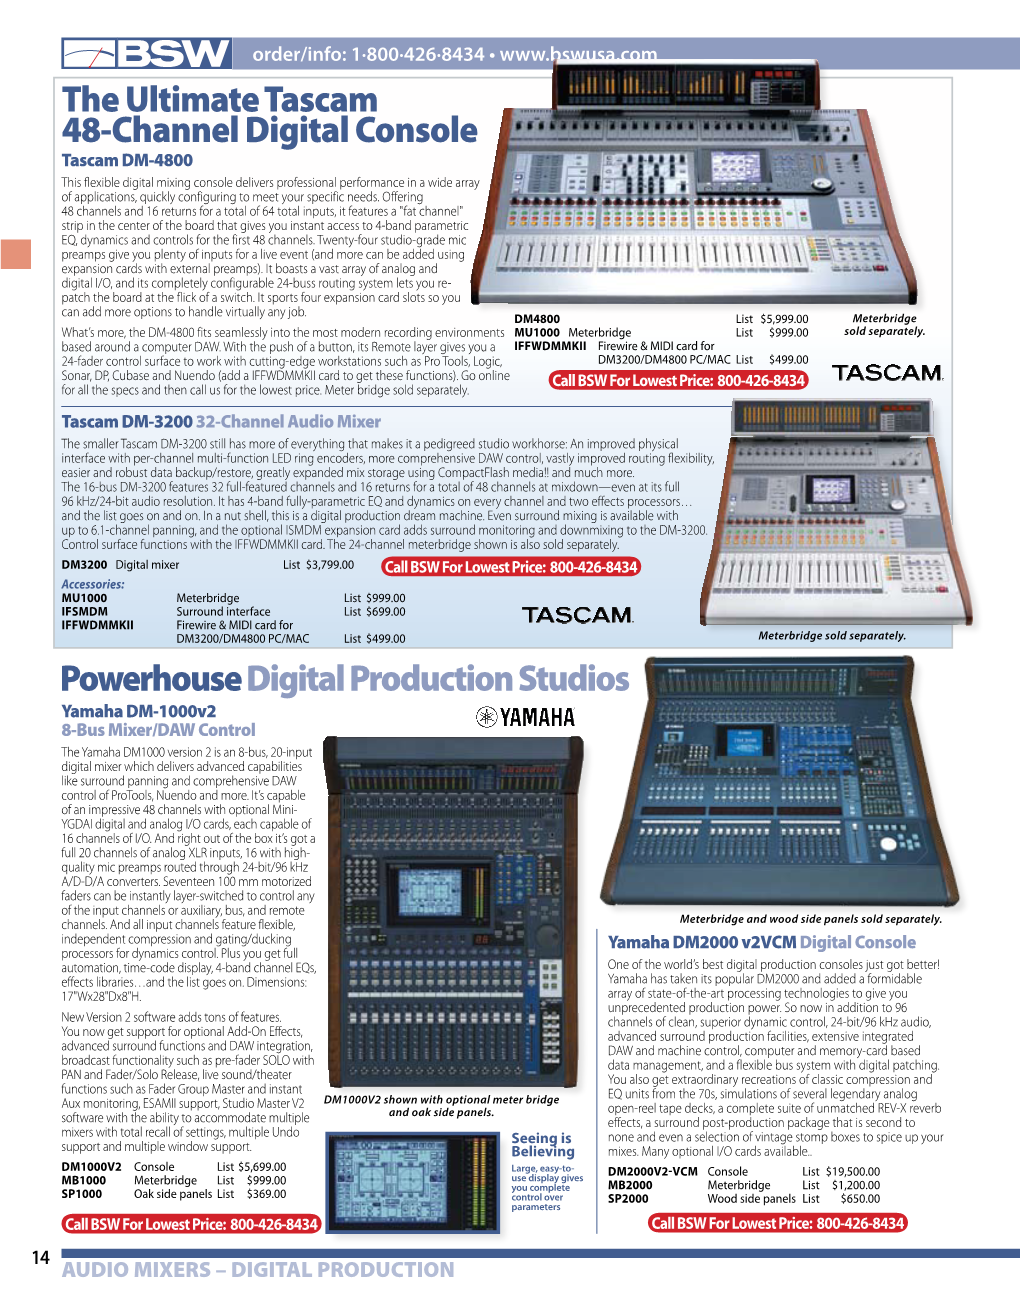 Powerhousedigital Production Studios the Ultimate Tascam 48